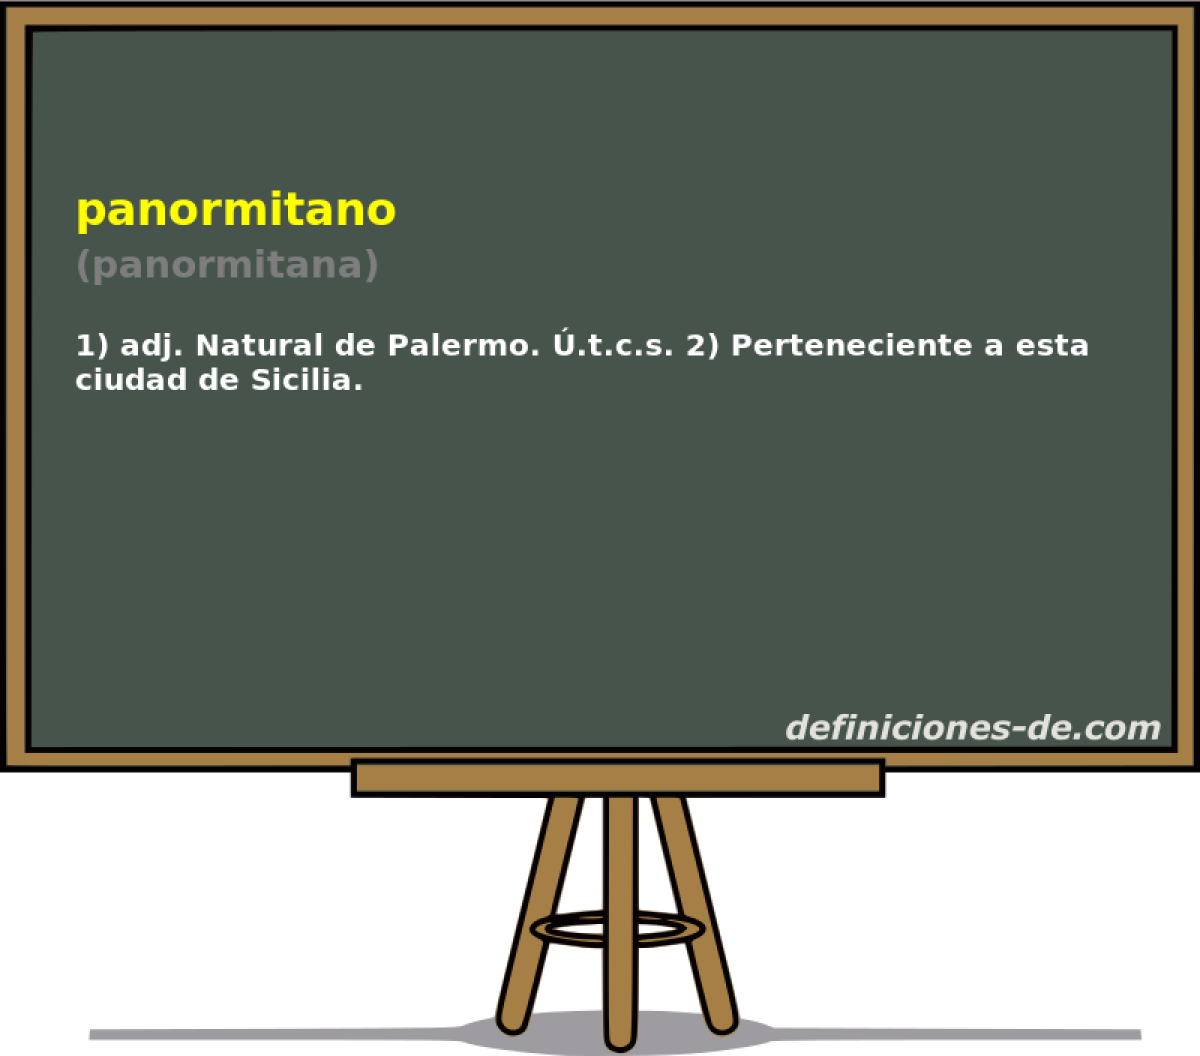 panormitano (panormitana)